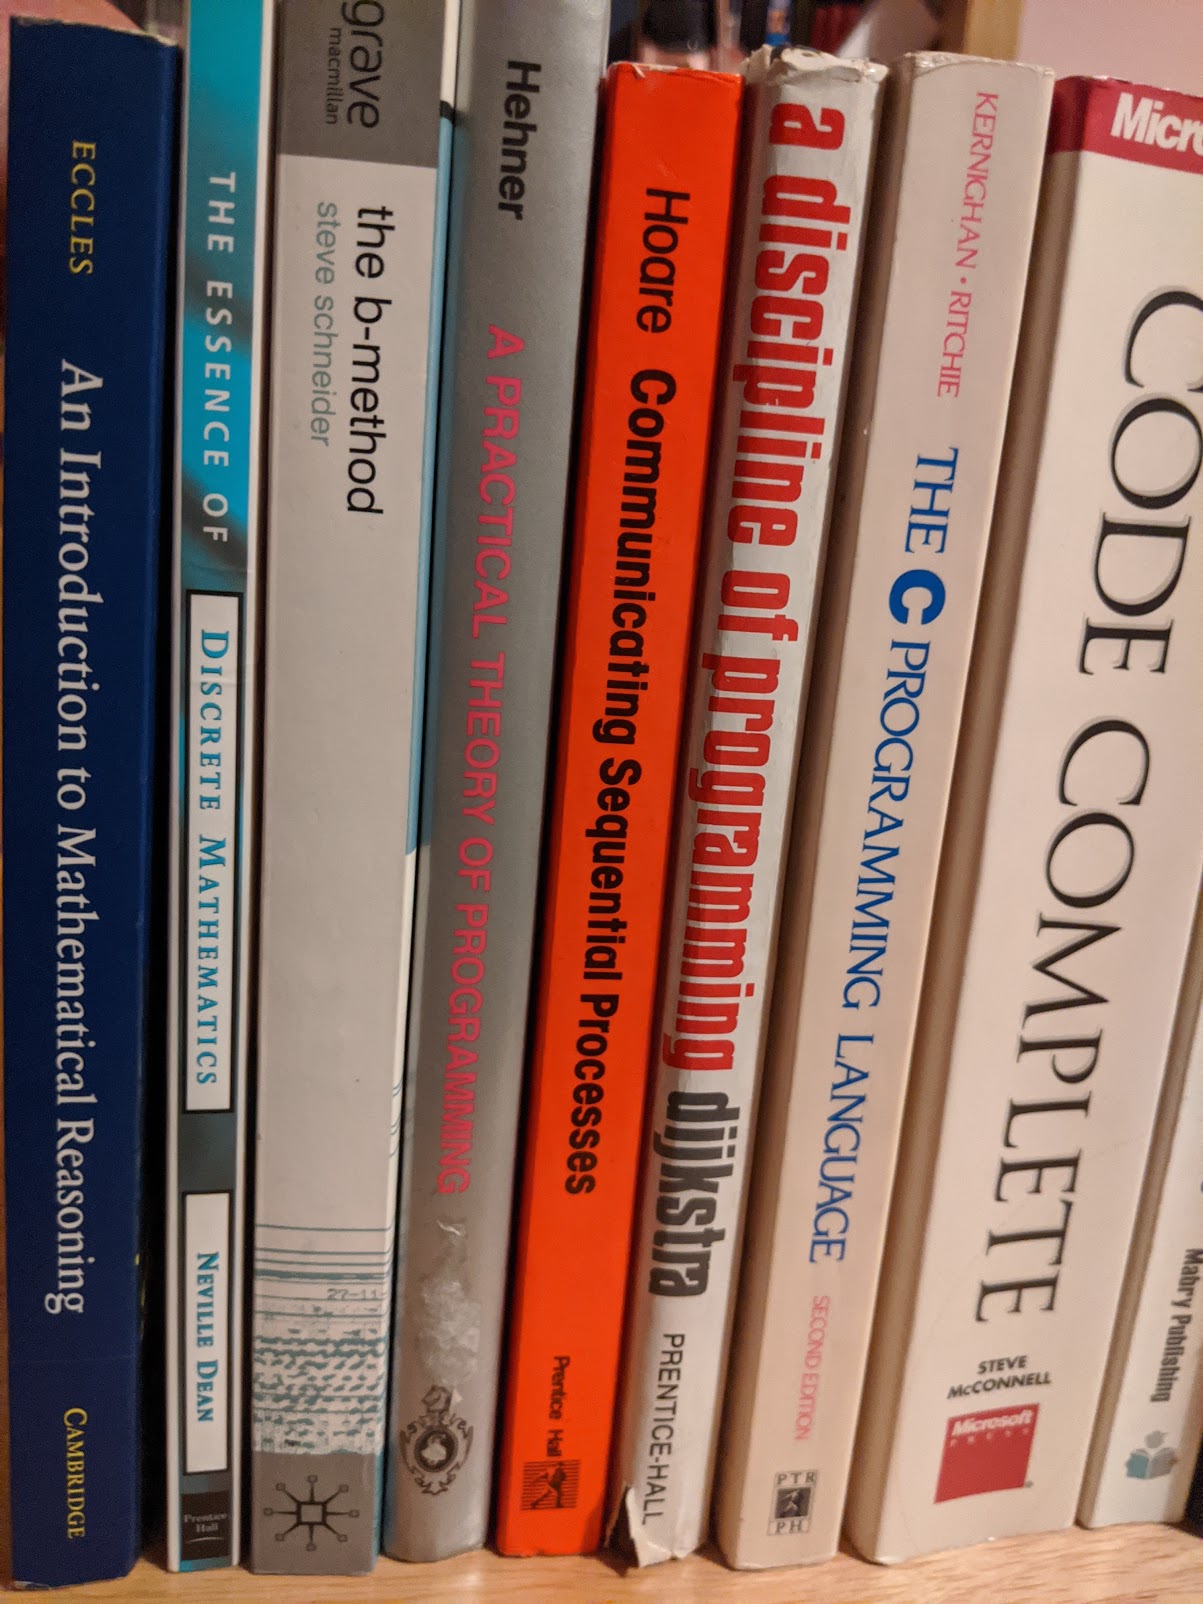 Computing books